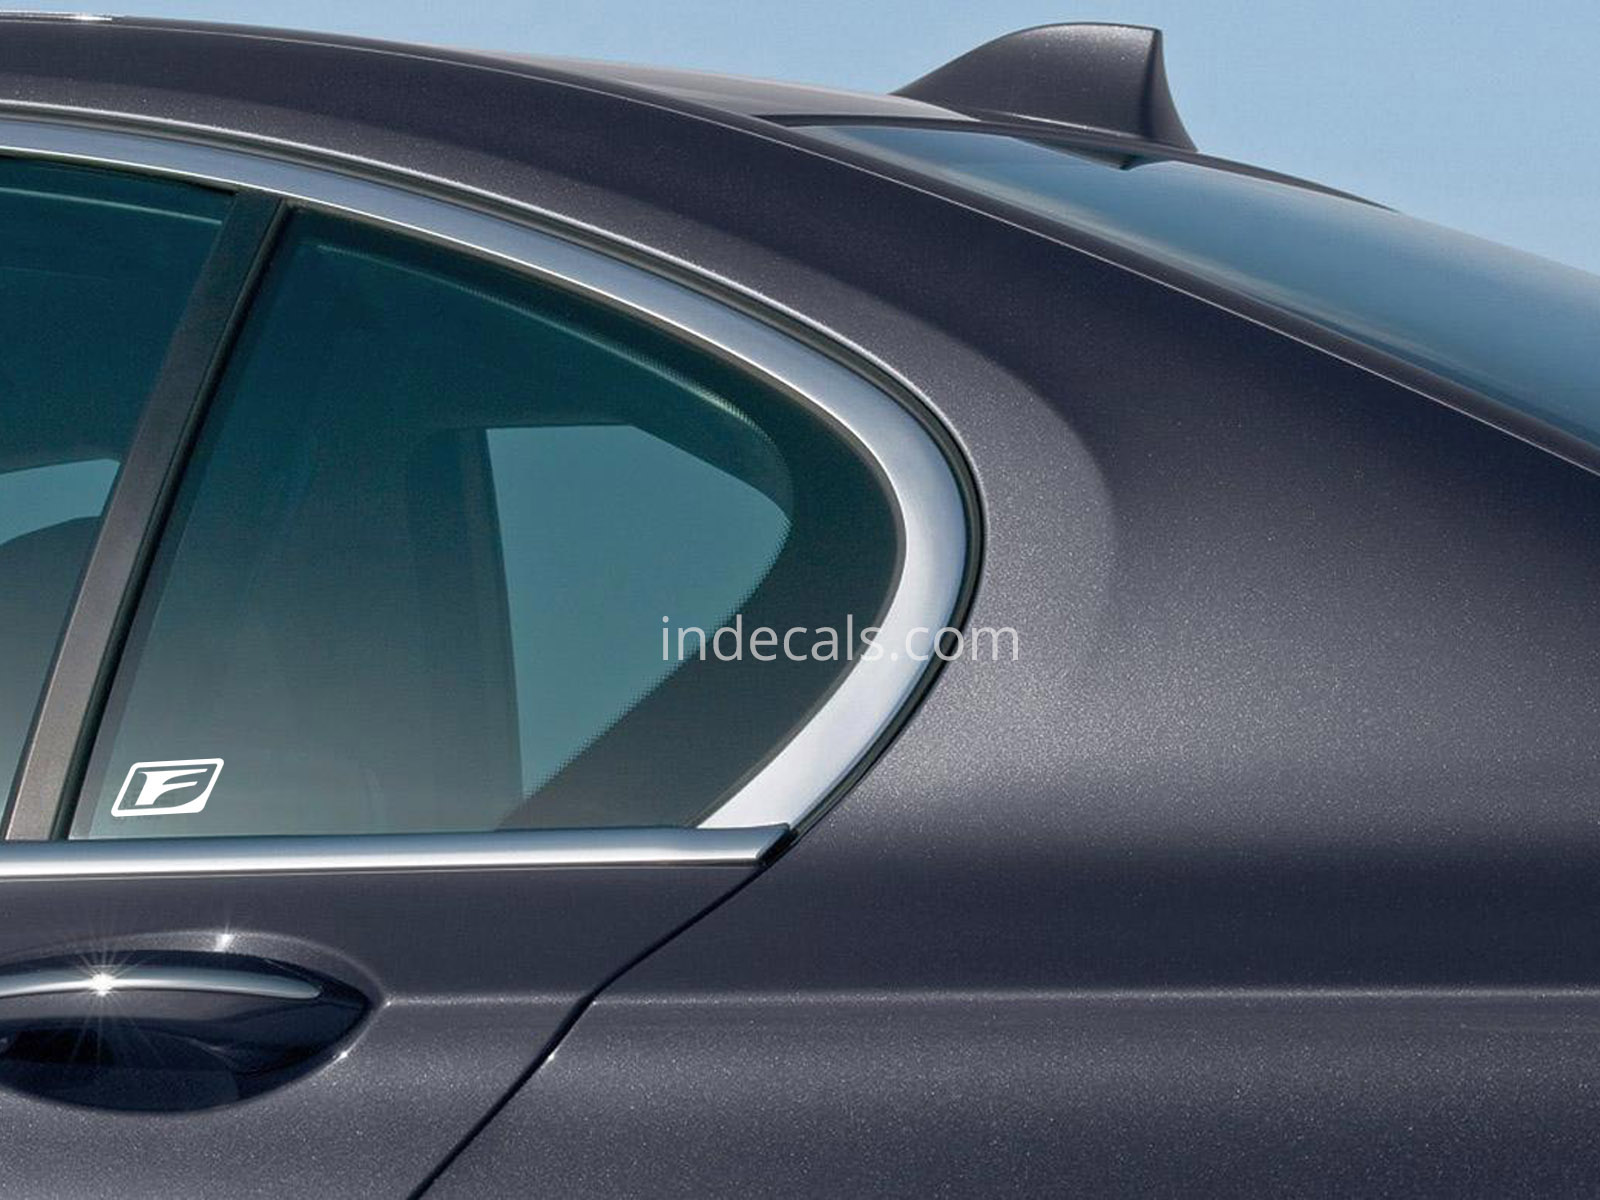 3 x Lexus F-sport Stickers for Rear Window - White